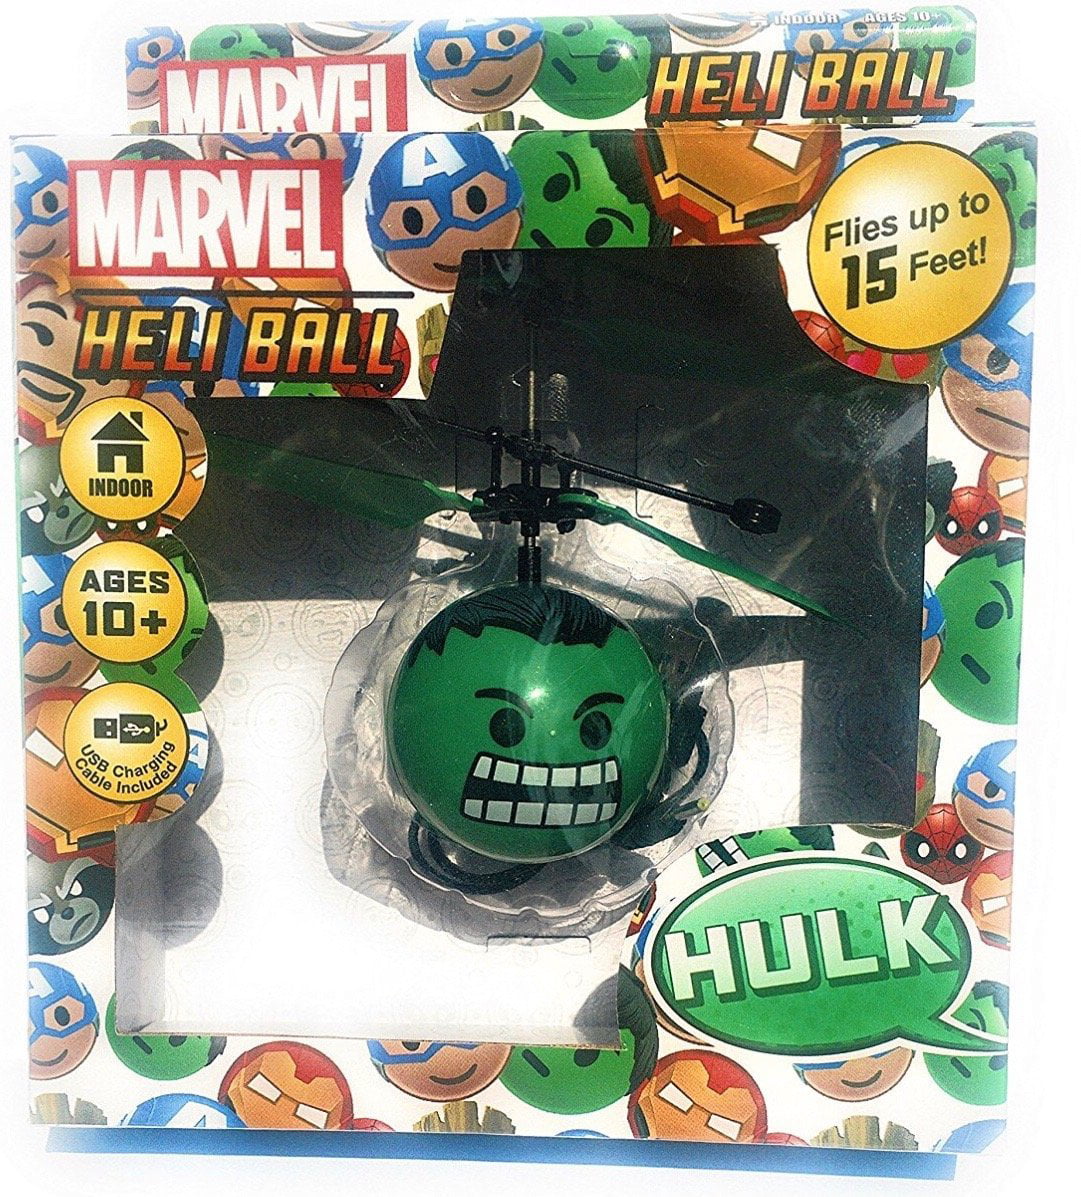 Marvel Avengers Hulk HeliBall Flying Helicopter Kids Toy Levitating Palm Control 